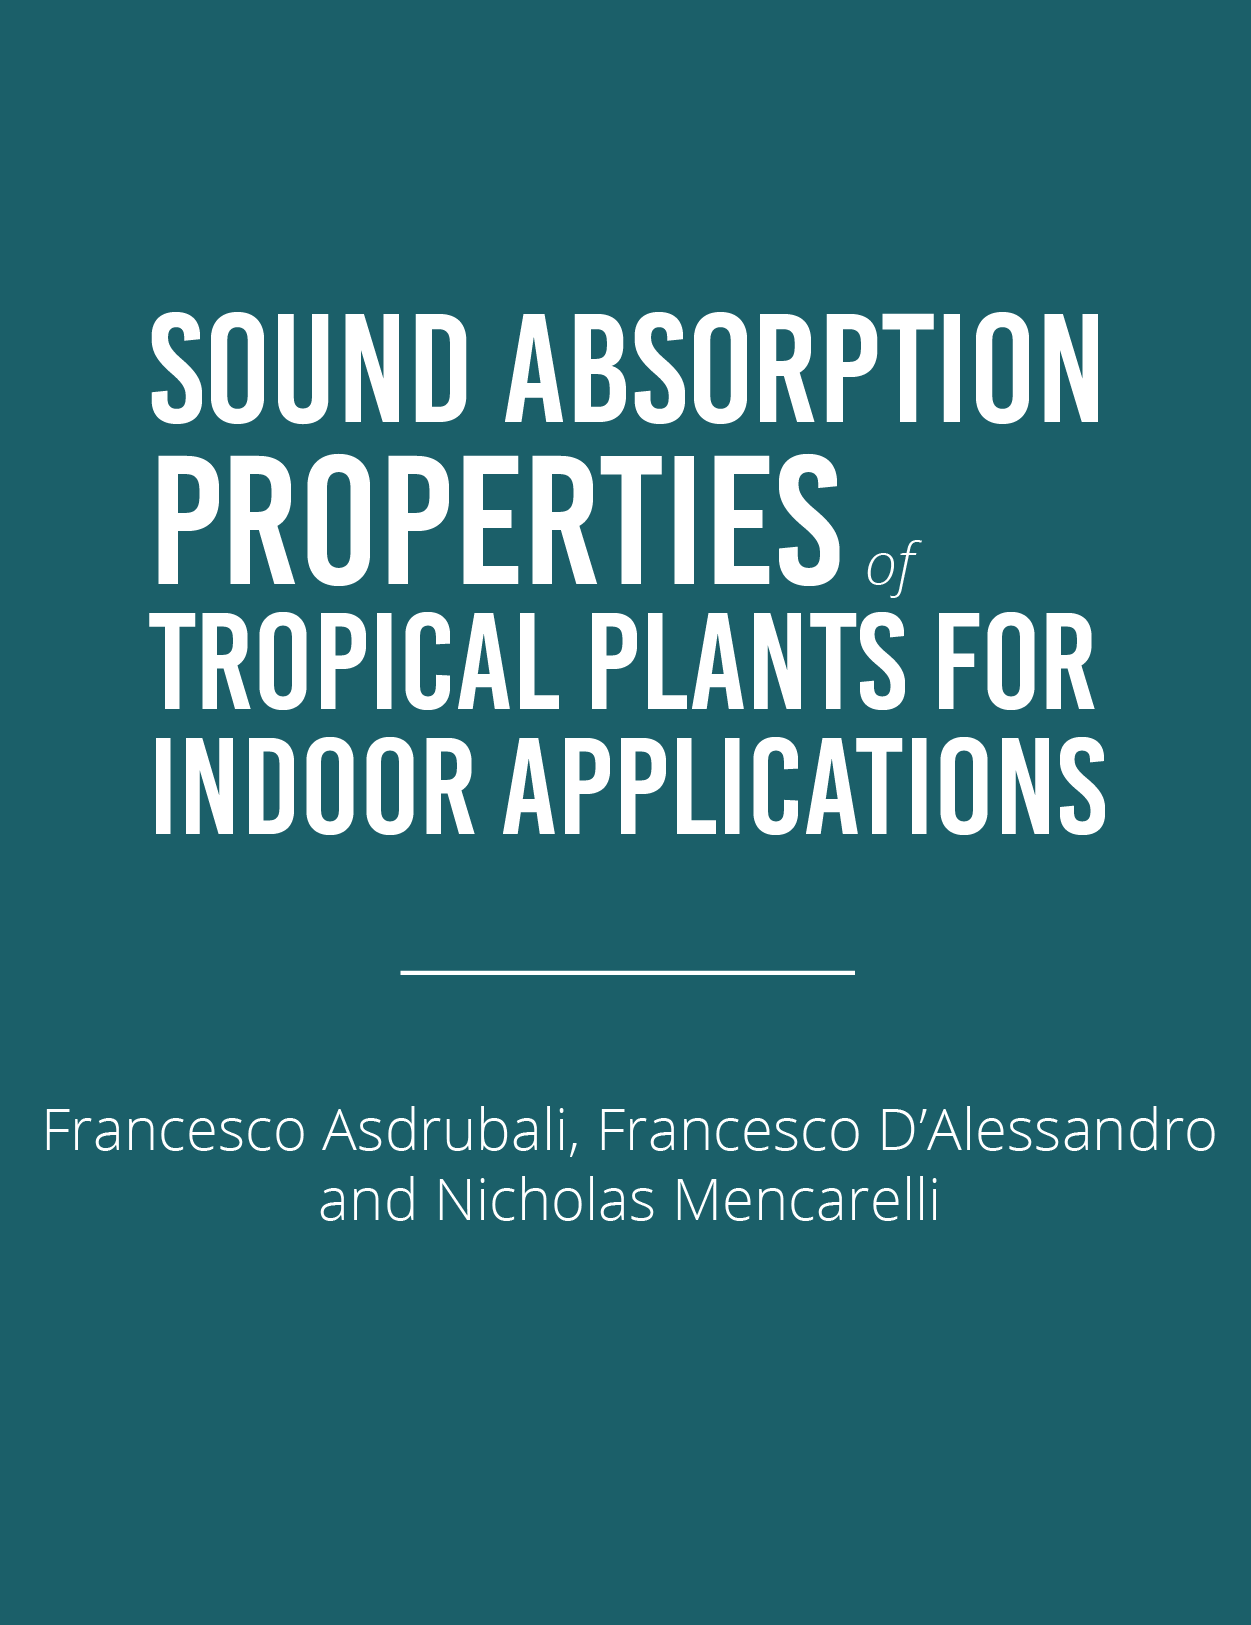 sound absorption plants